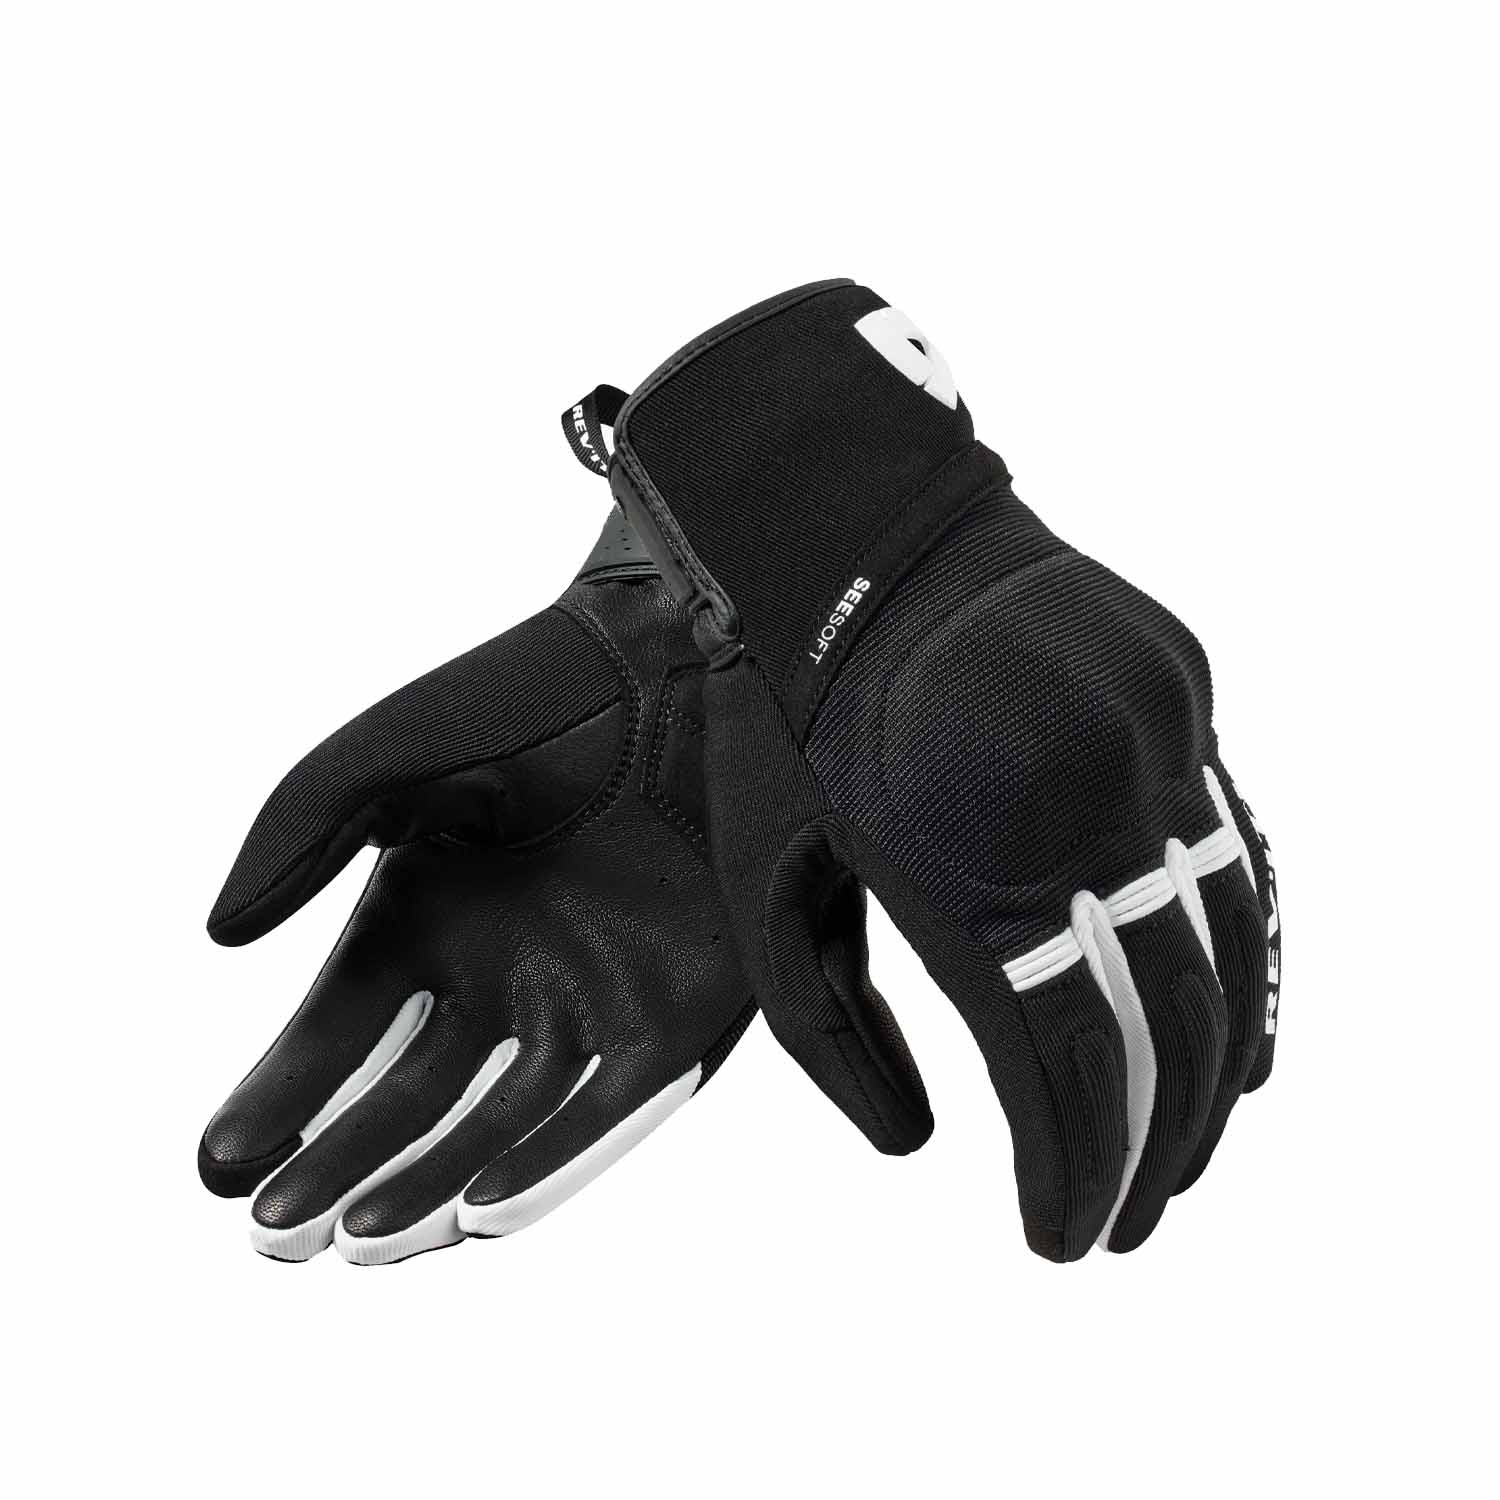 Image of REV'IT! Mosca 2 Gloves Black White Größe S